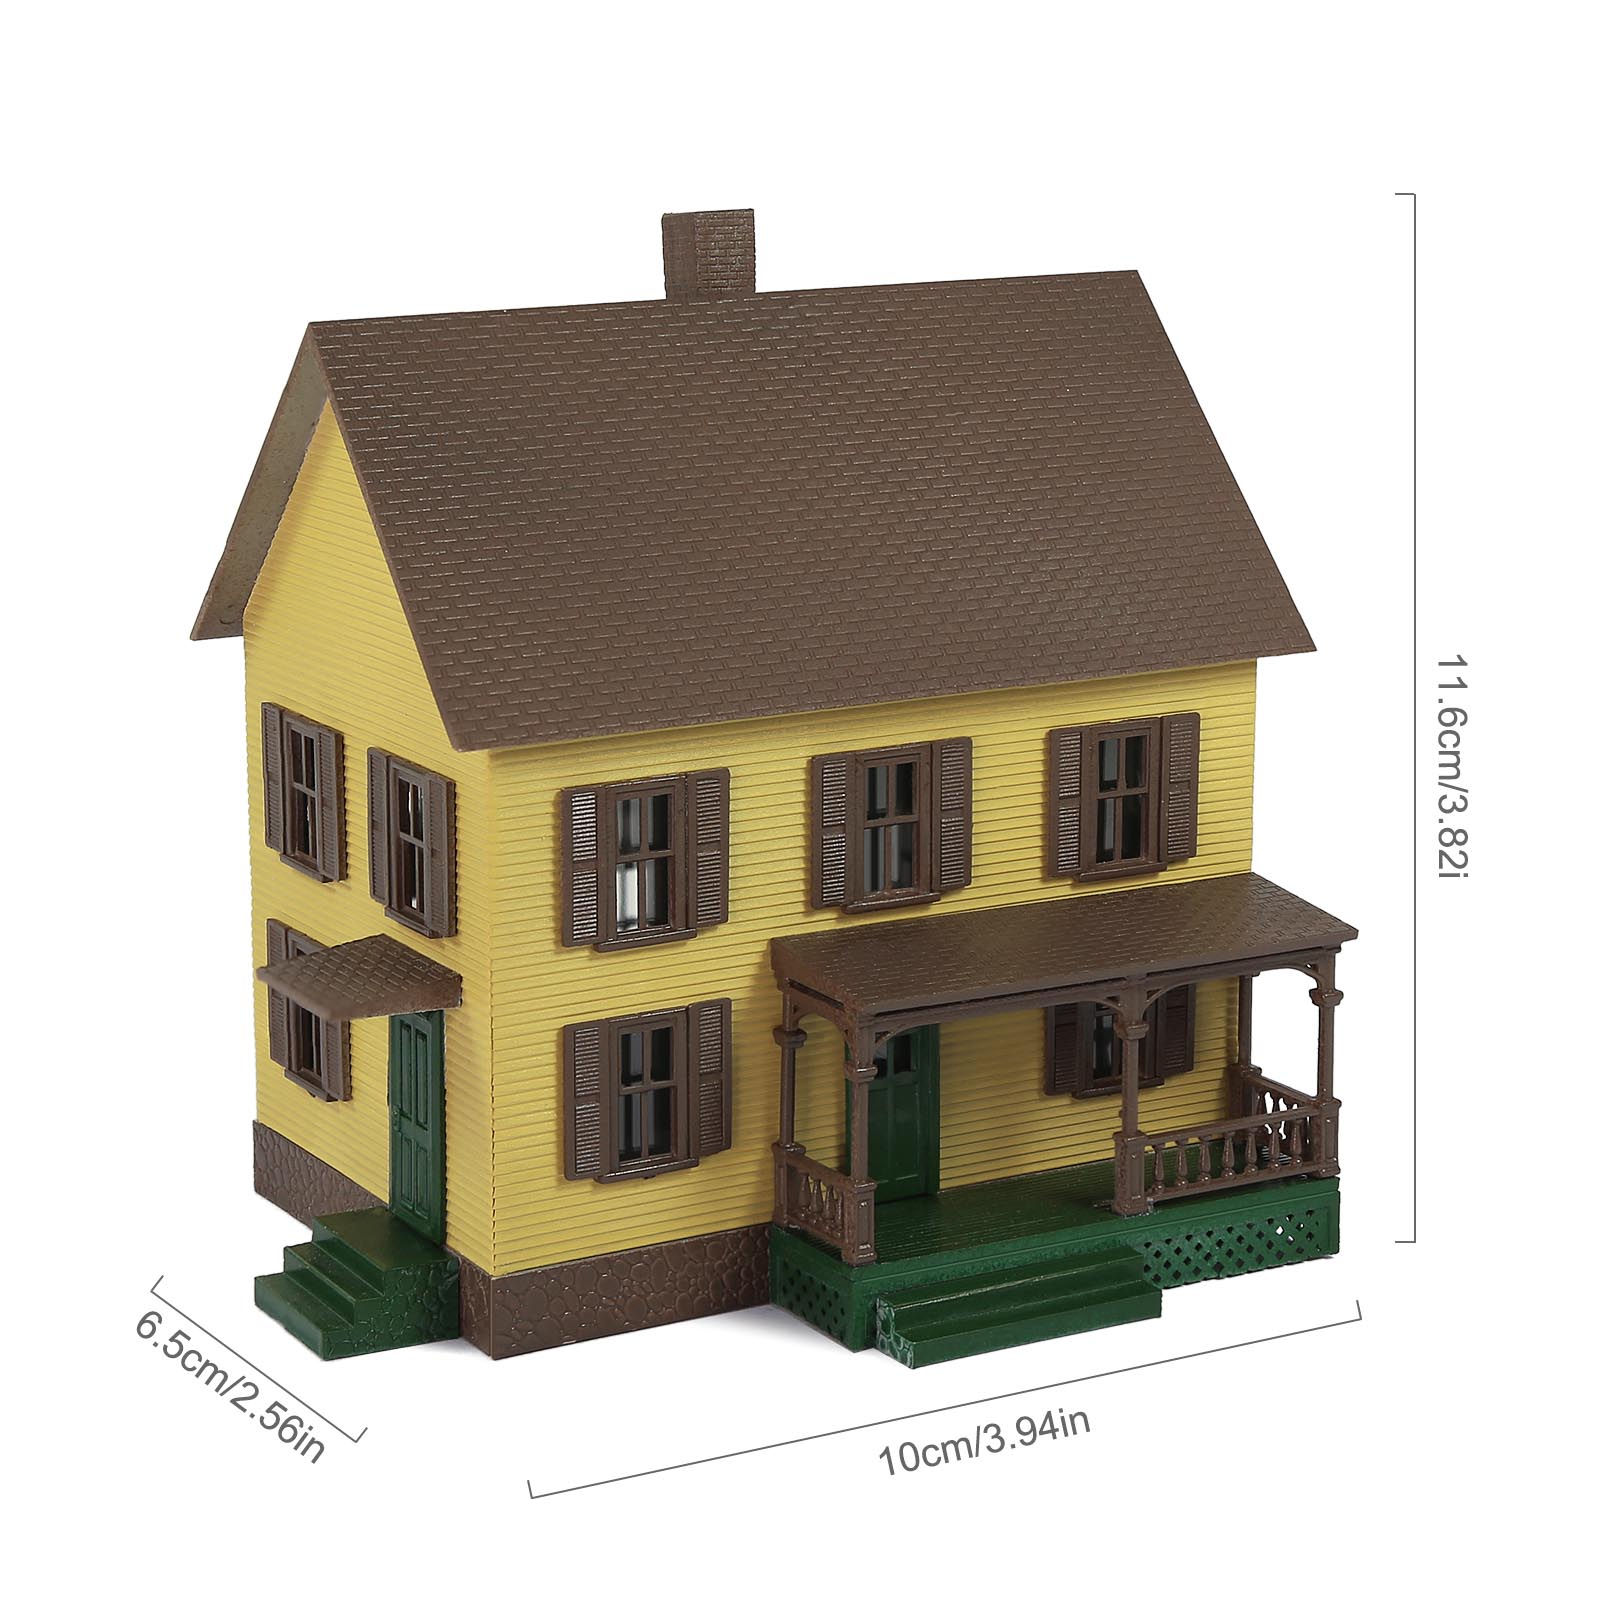 JZ8709 1 Piece HO Scale 1:87 Model Village House with Porch Assembled